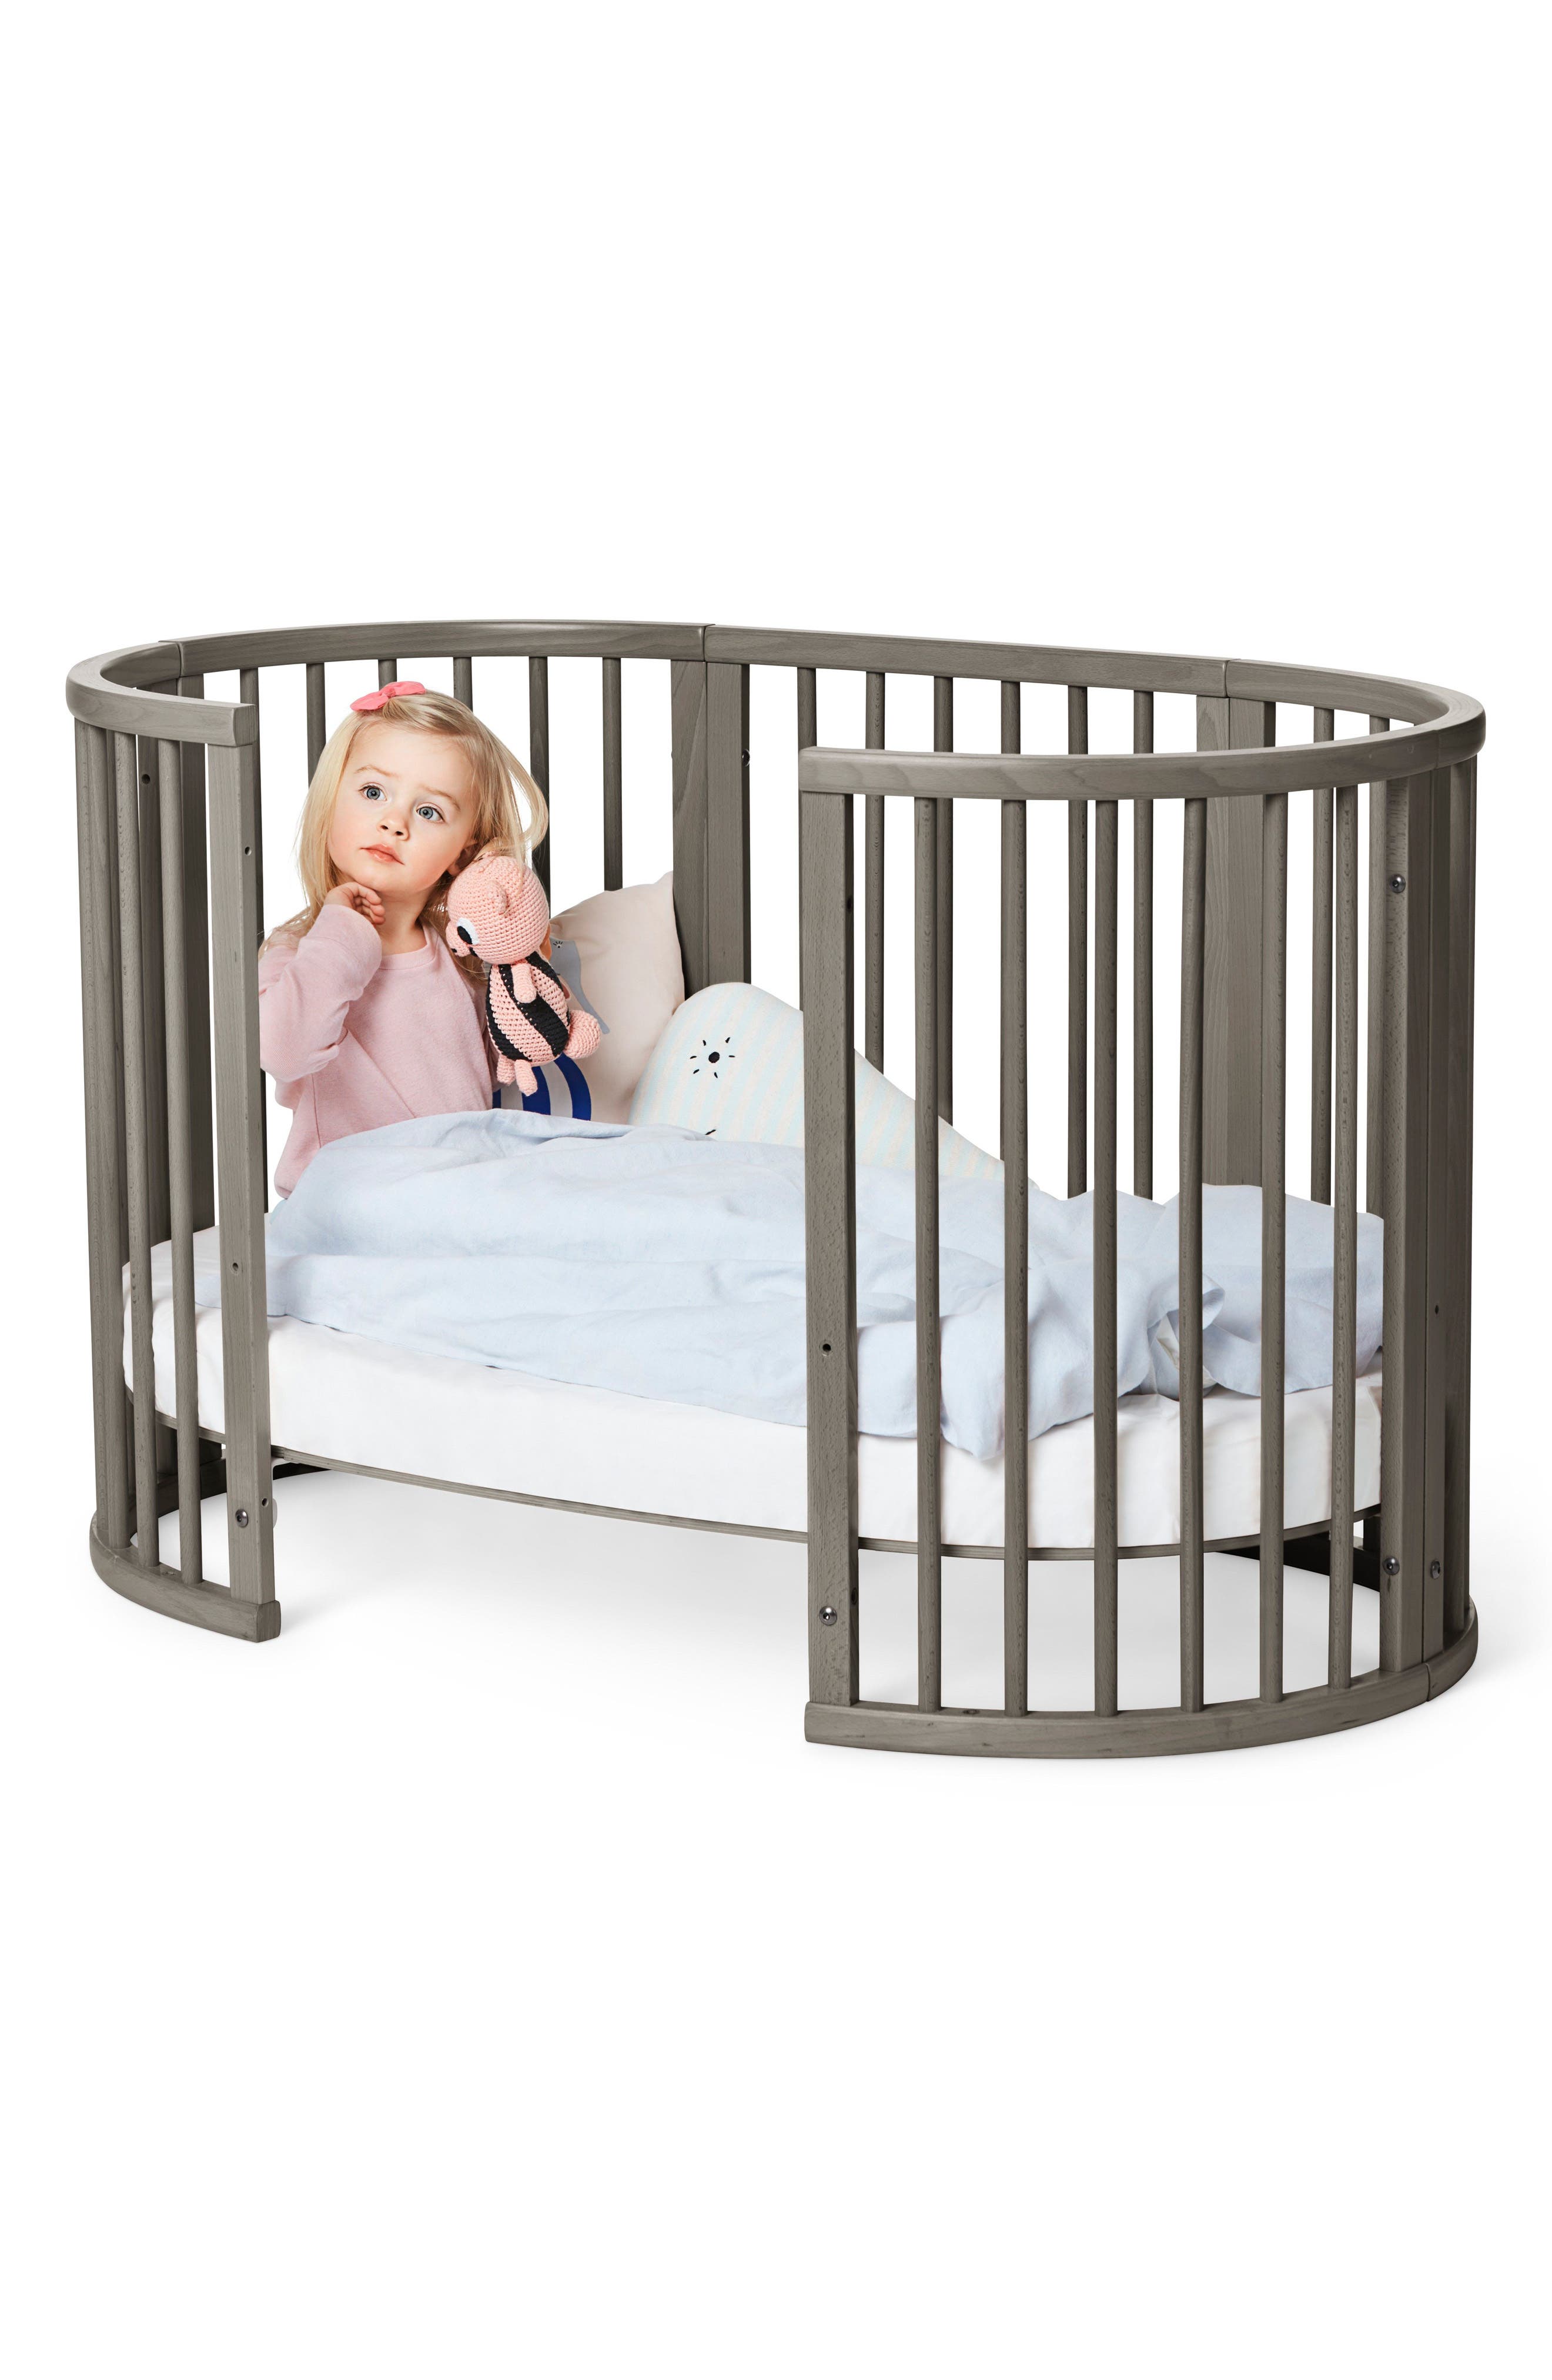 stokke oval crib